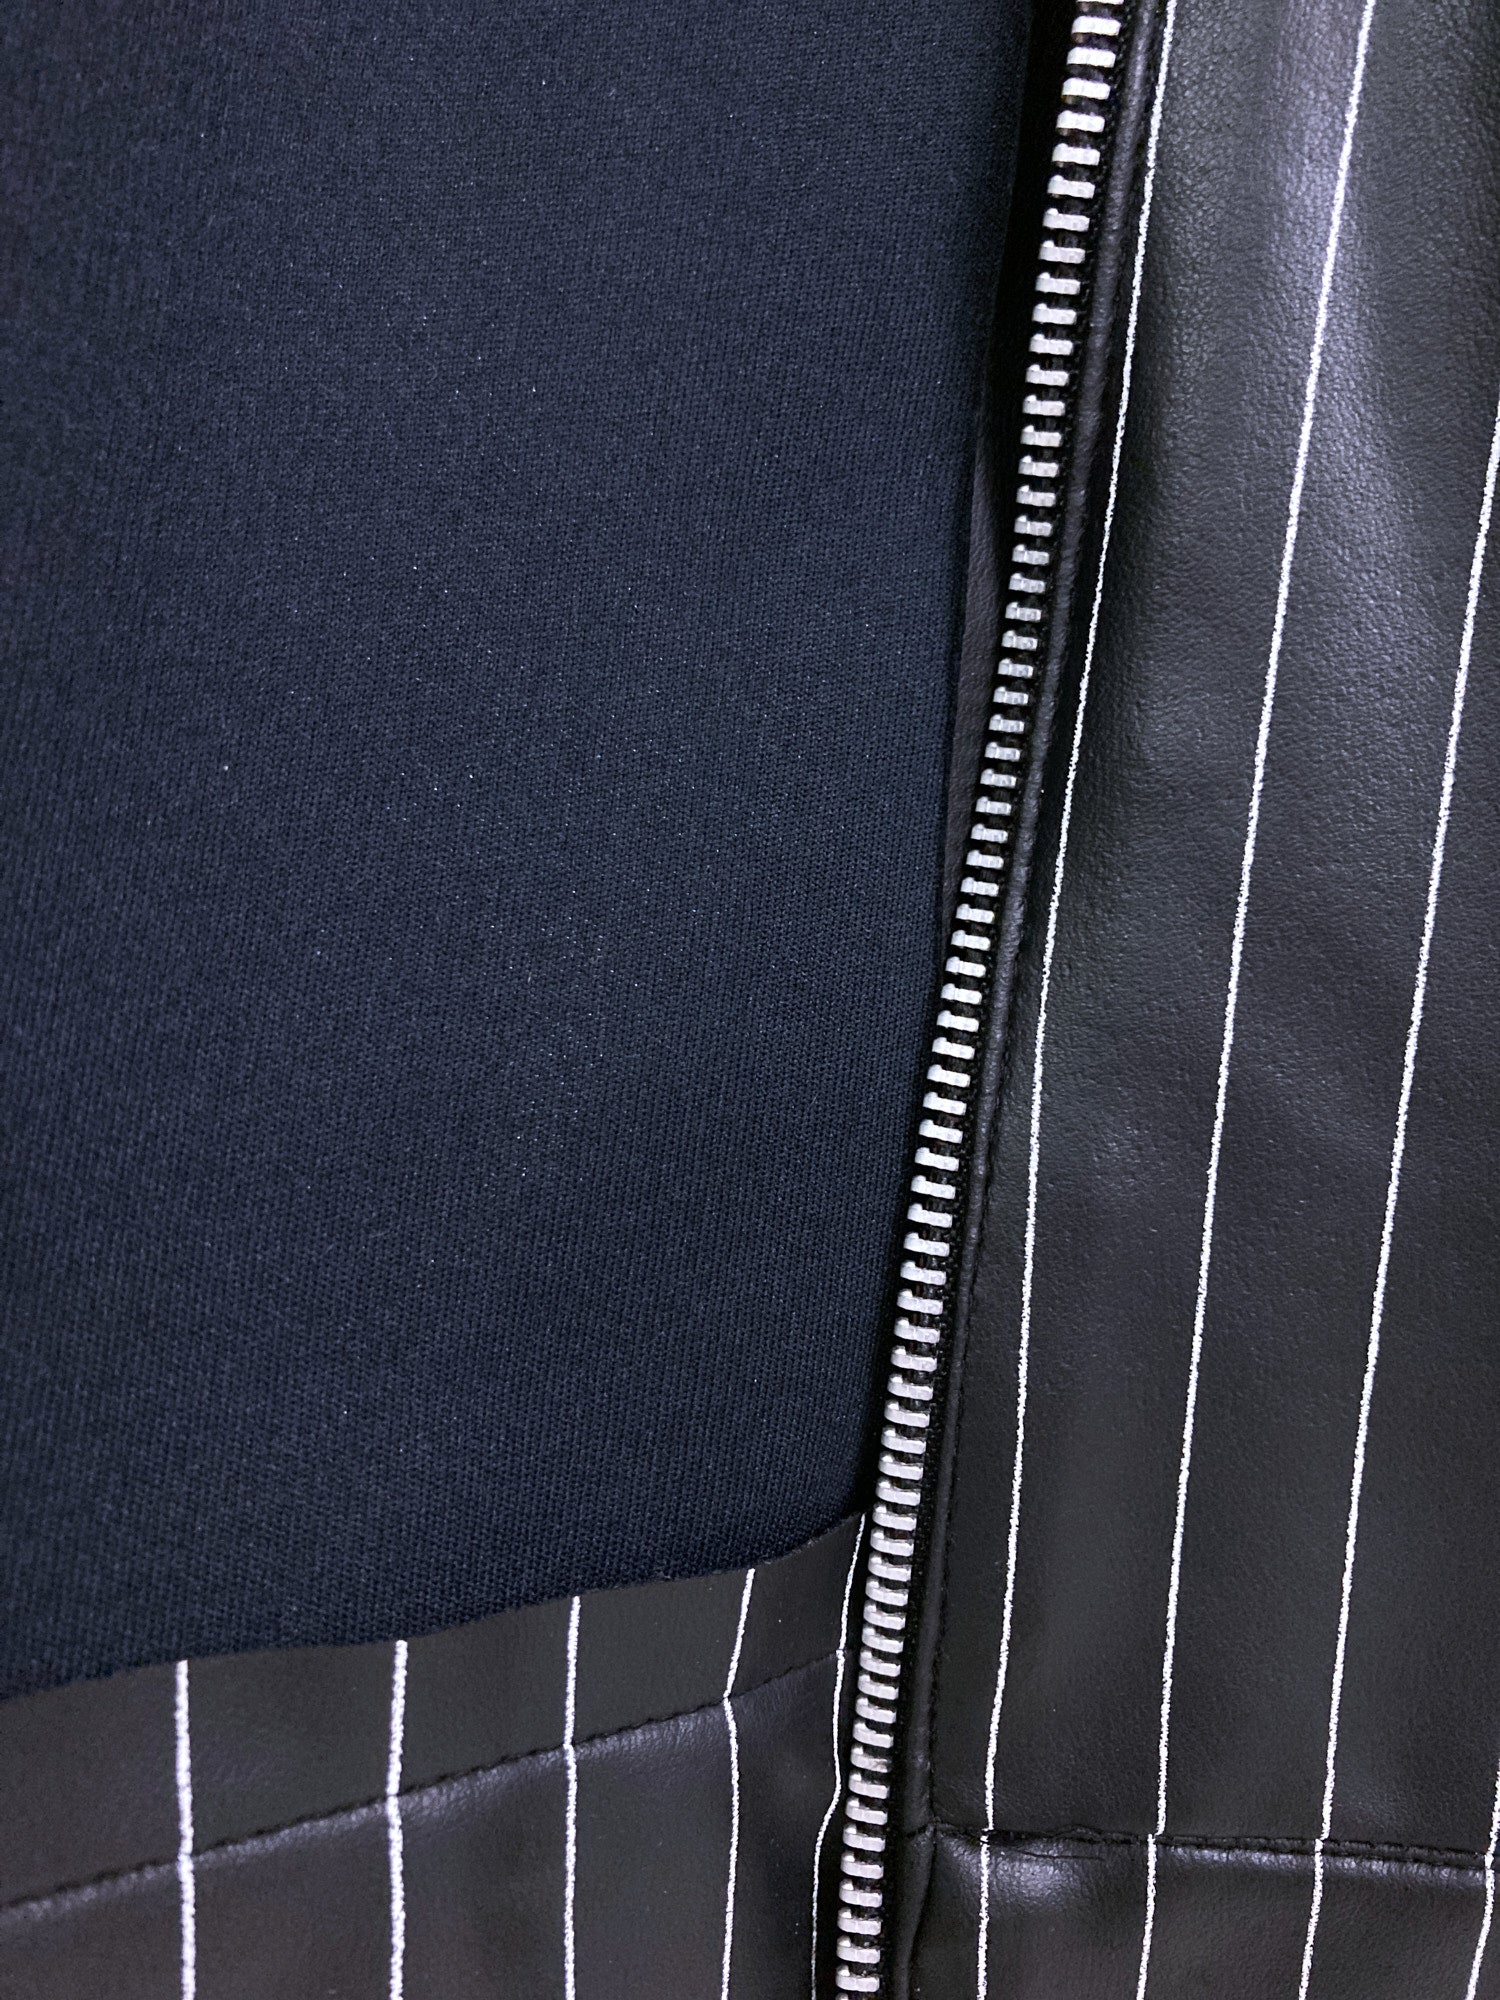 Jean Colonna SS1996 striped black vinyl zip jacket - S